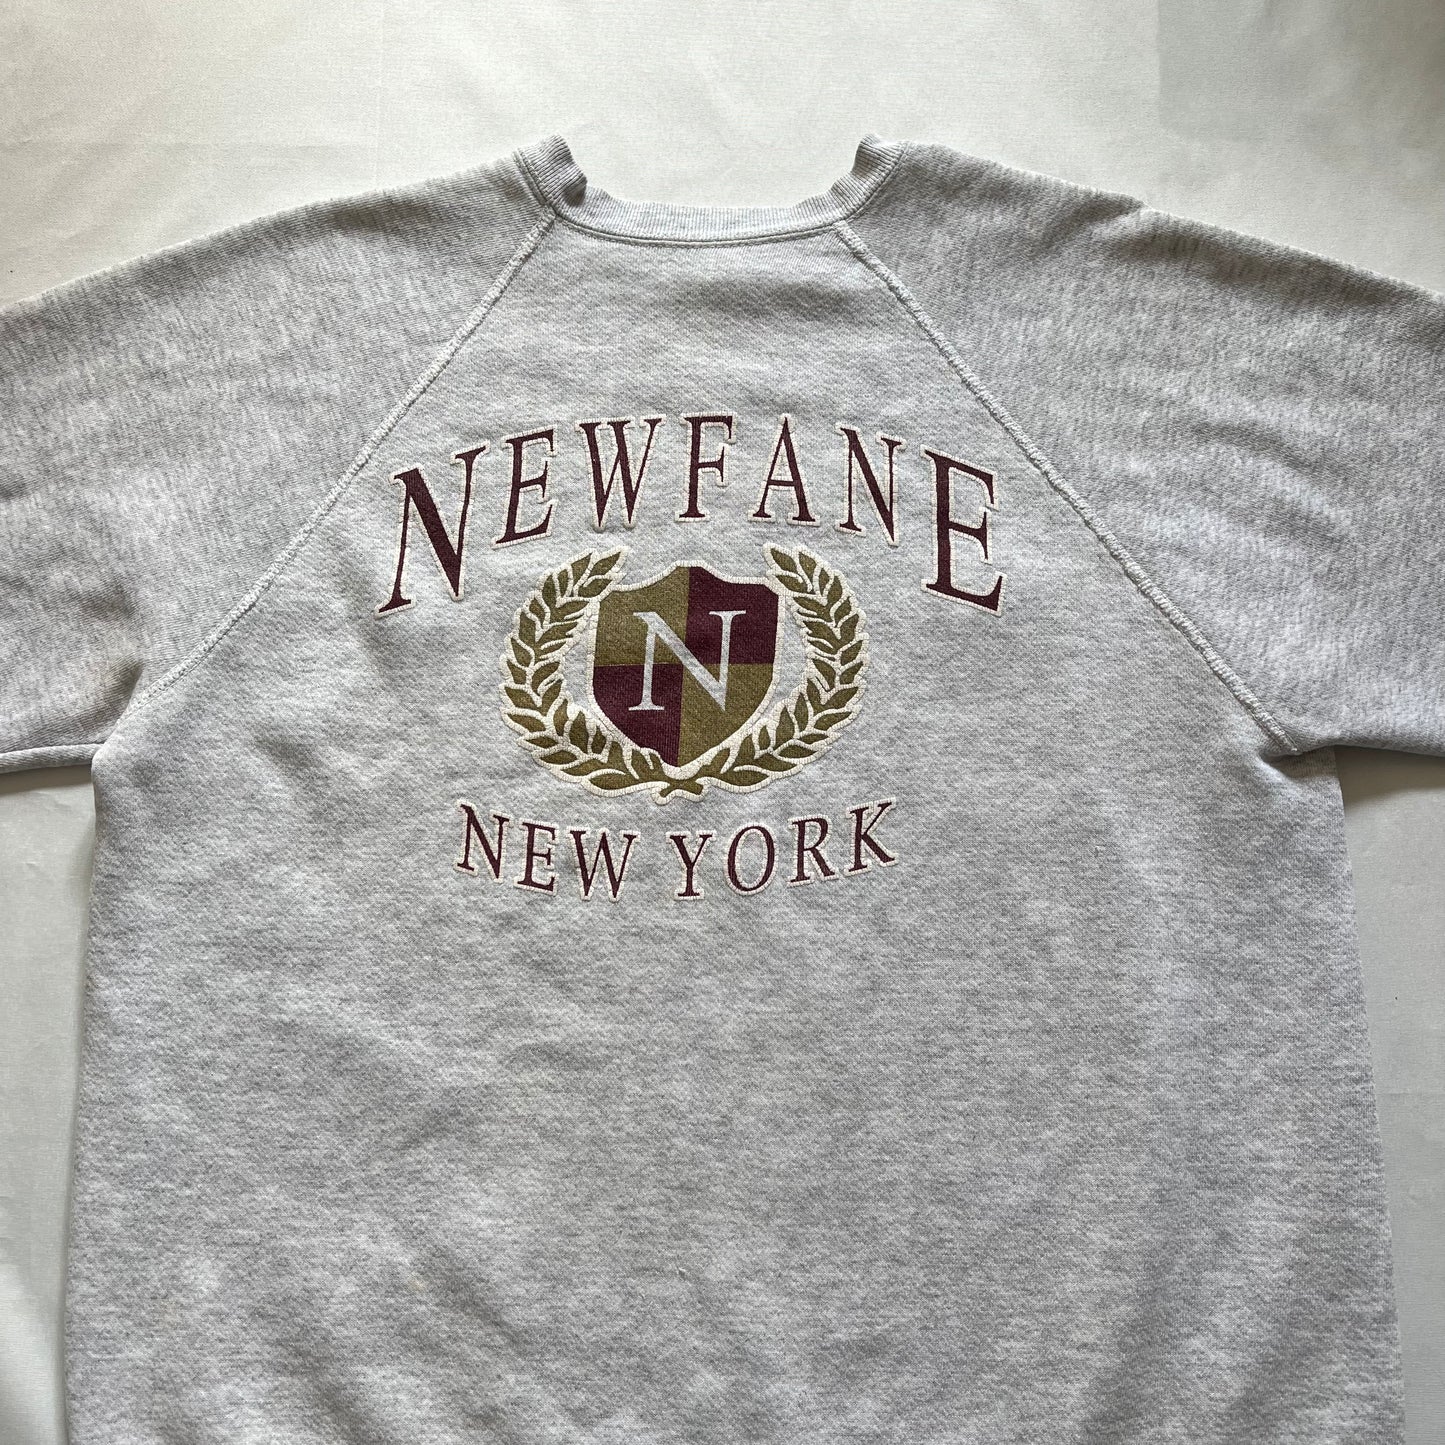 80's "NEWFANE NEW YORK" SWEATSHIRT